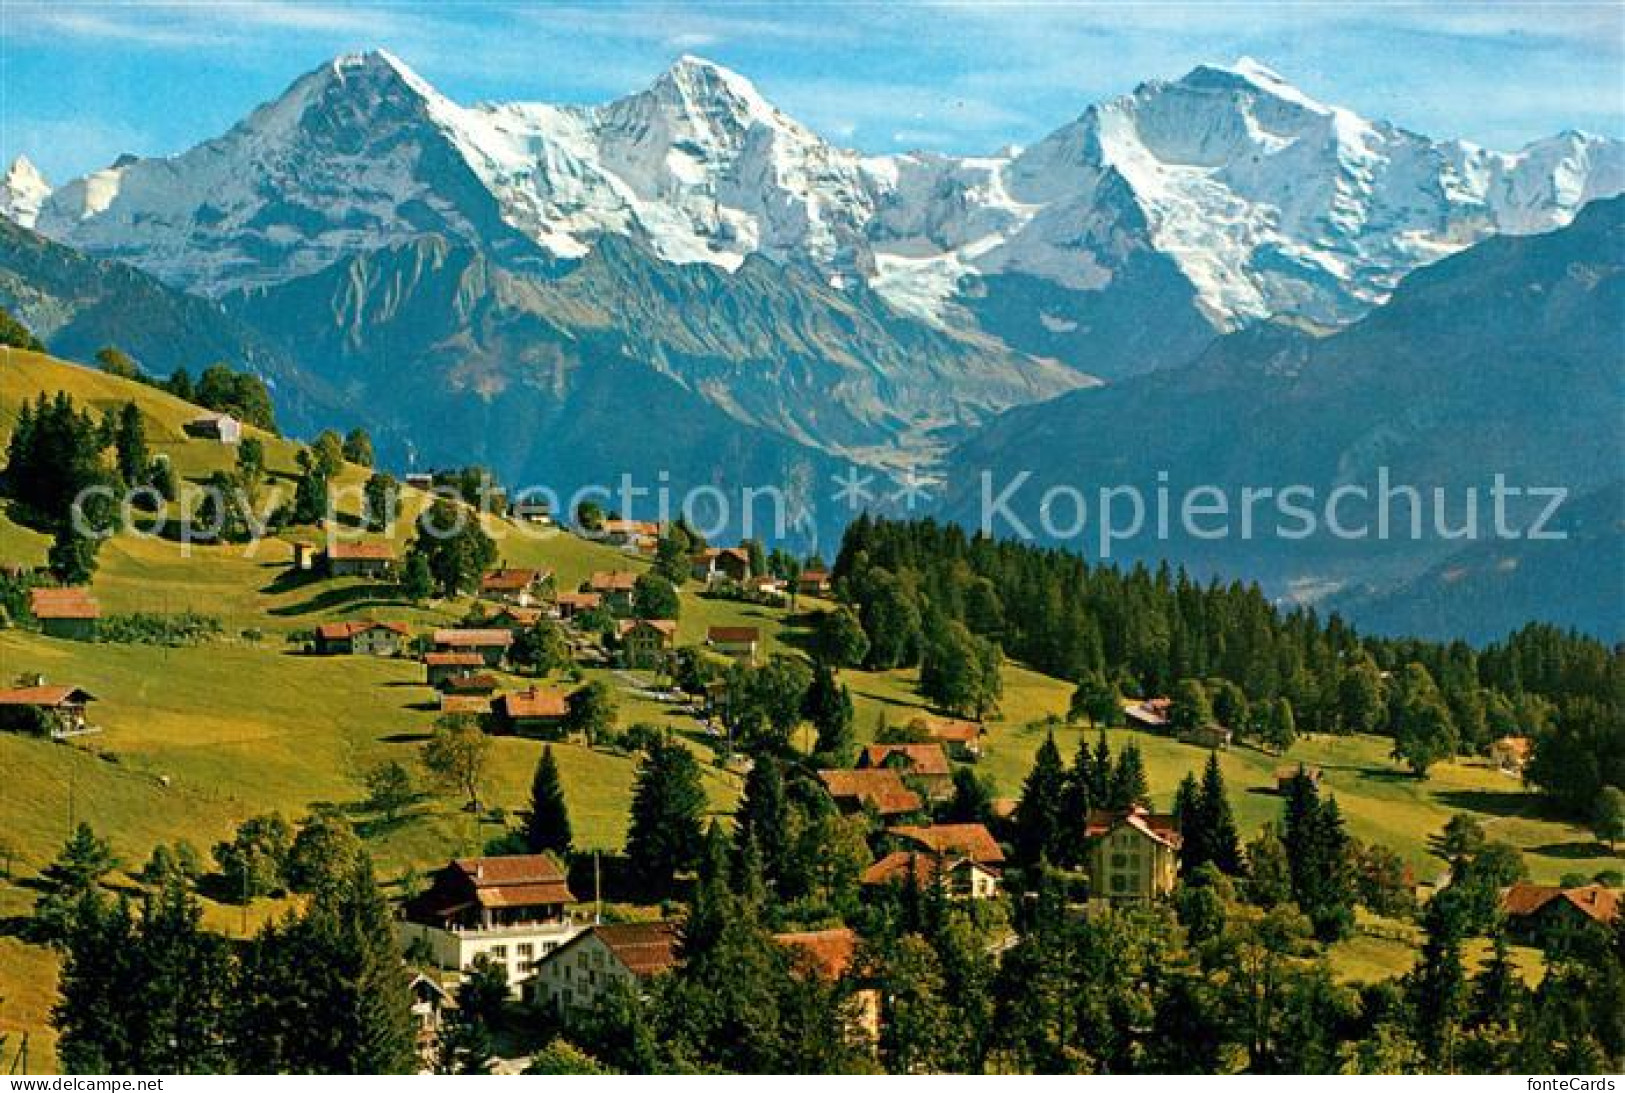 13154167 Beatenberg Waldegg Finsteraarhorn Eiger Moenche Jungfrau Beatenberg - Sonstige & Ohne Zuordnung